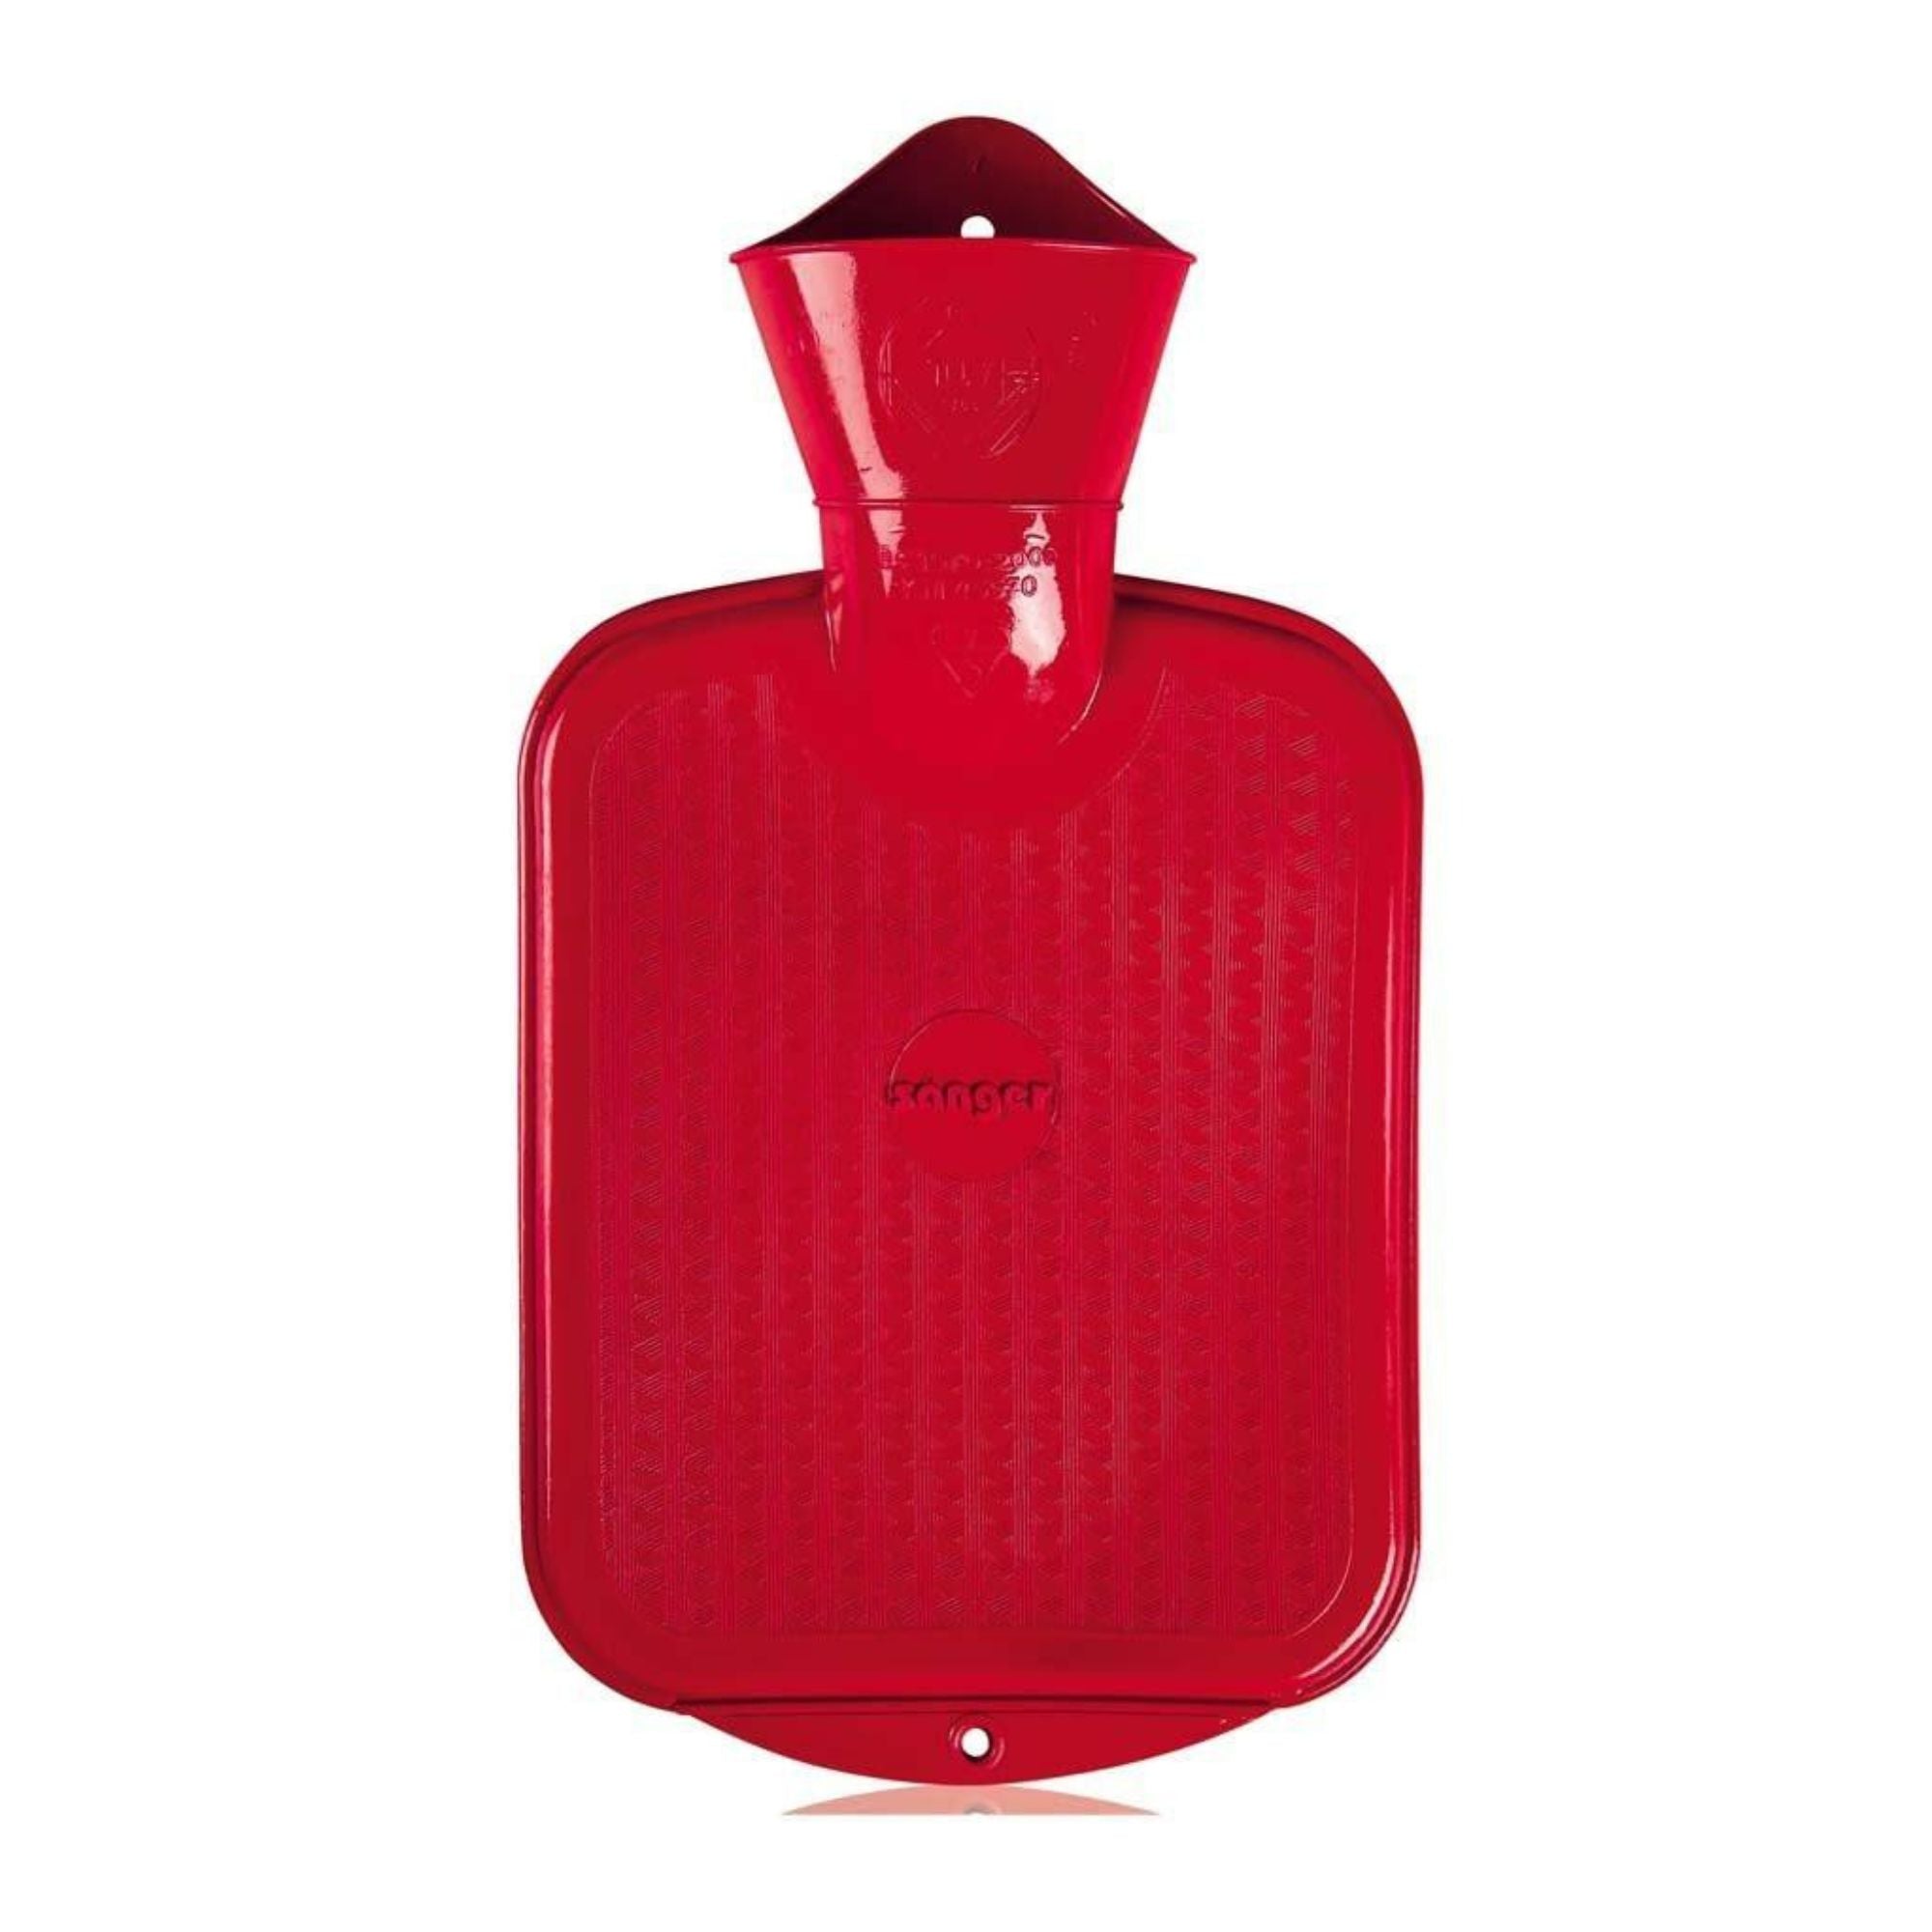 0.8 Litre Red Sanger Hot Water Bottle